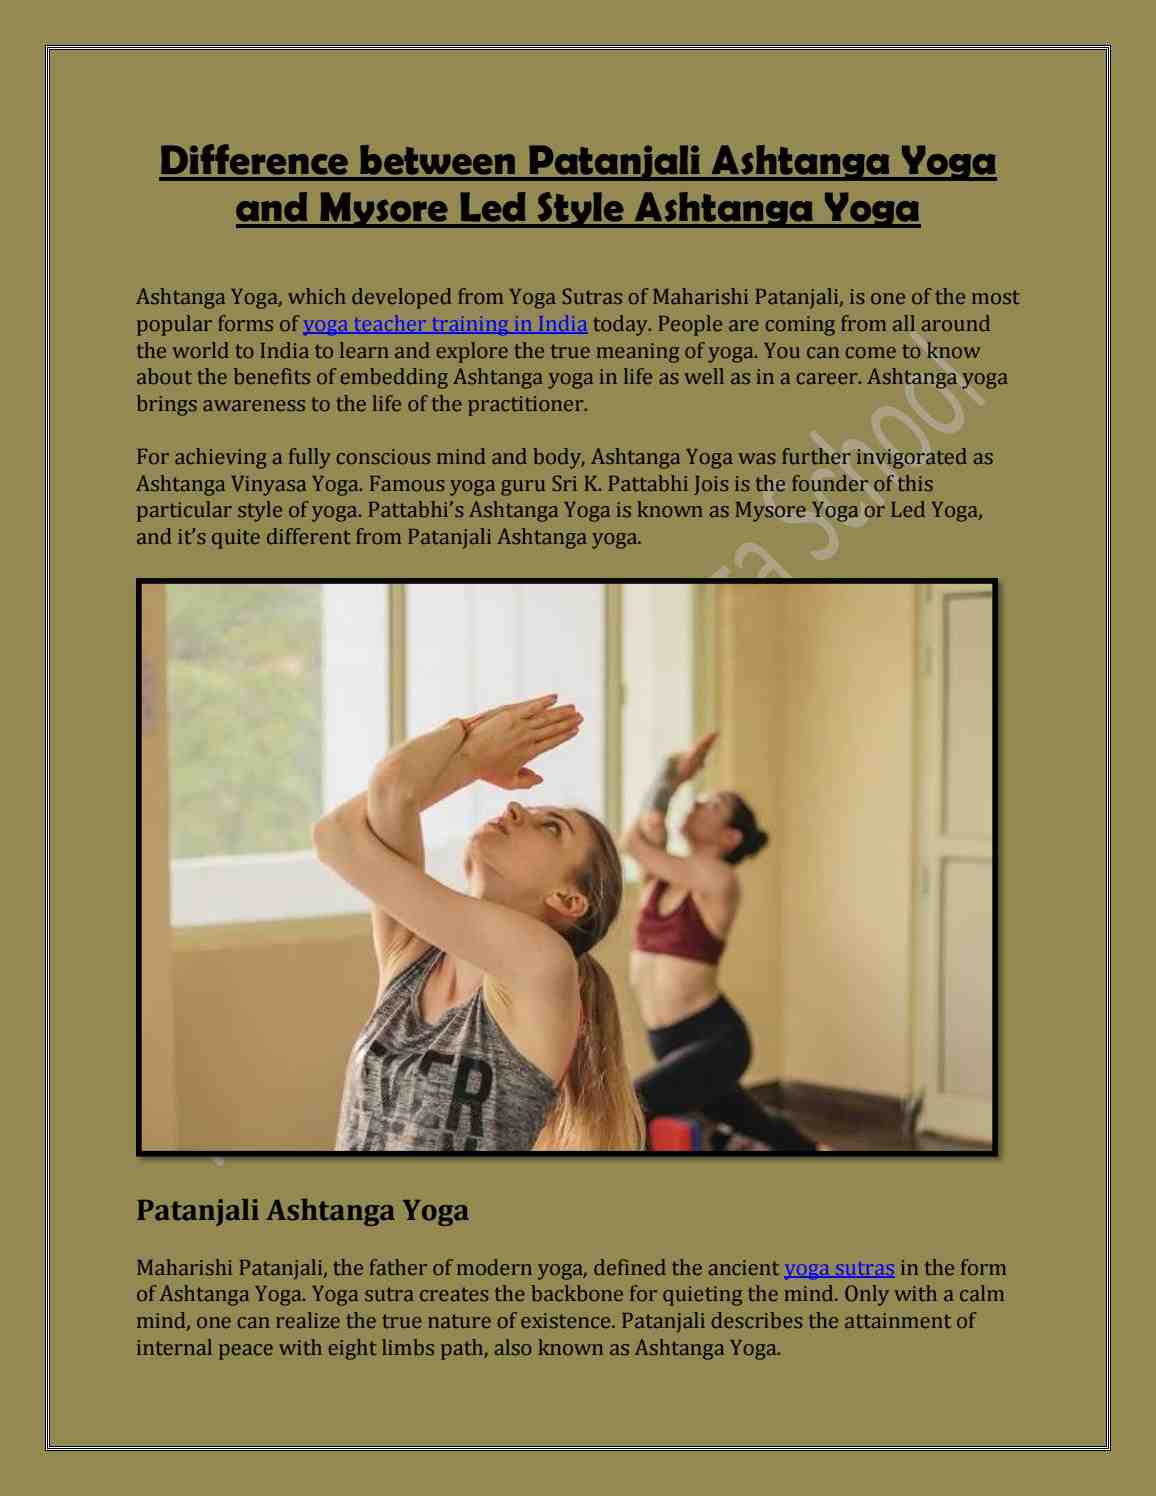 Is Ashtanga yoga considered strength training?